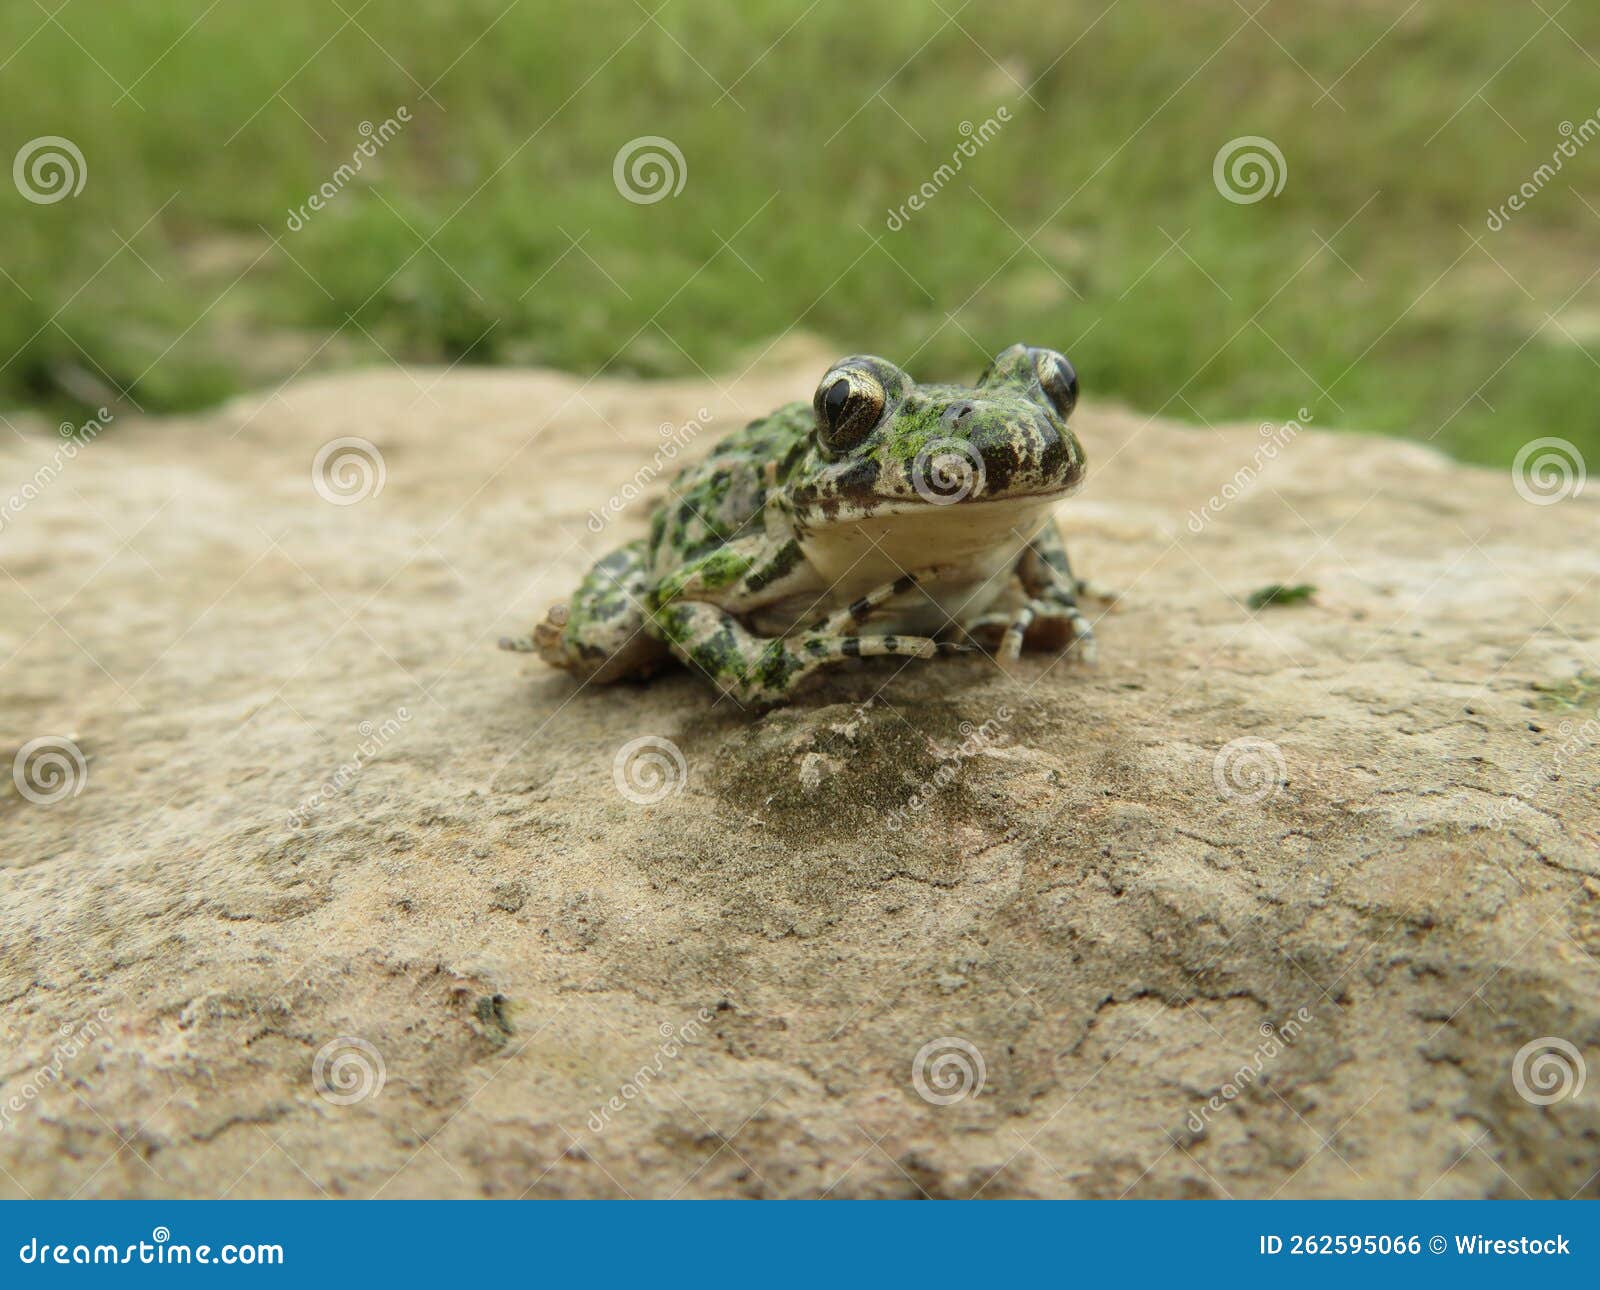 common parsley frog, pelodytes punctatus, in a stone